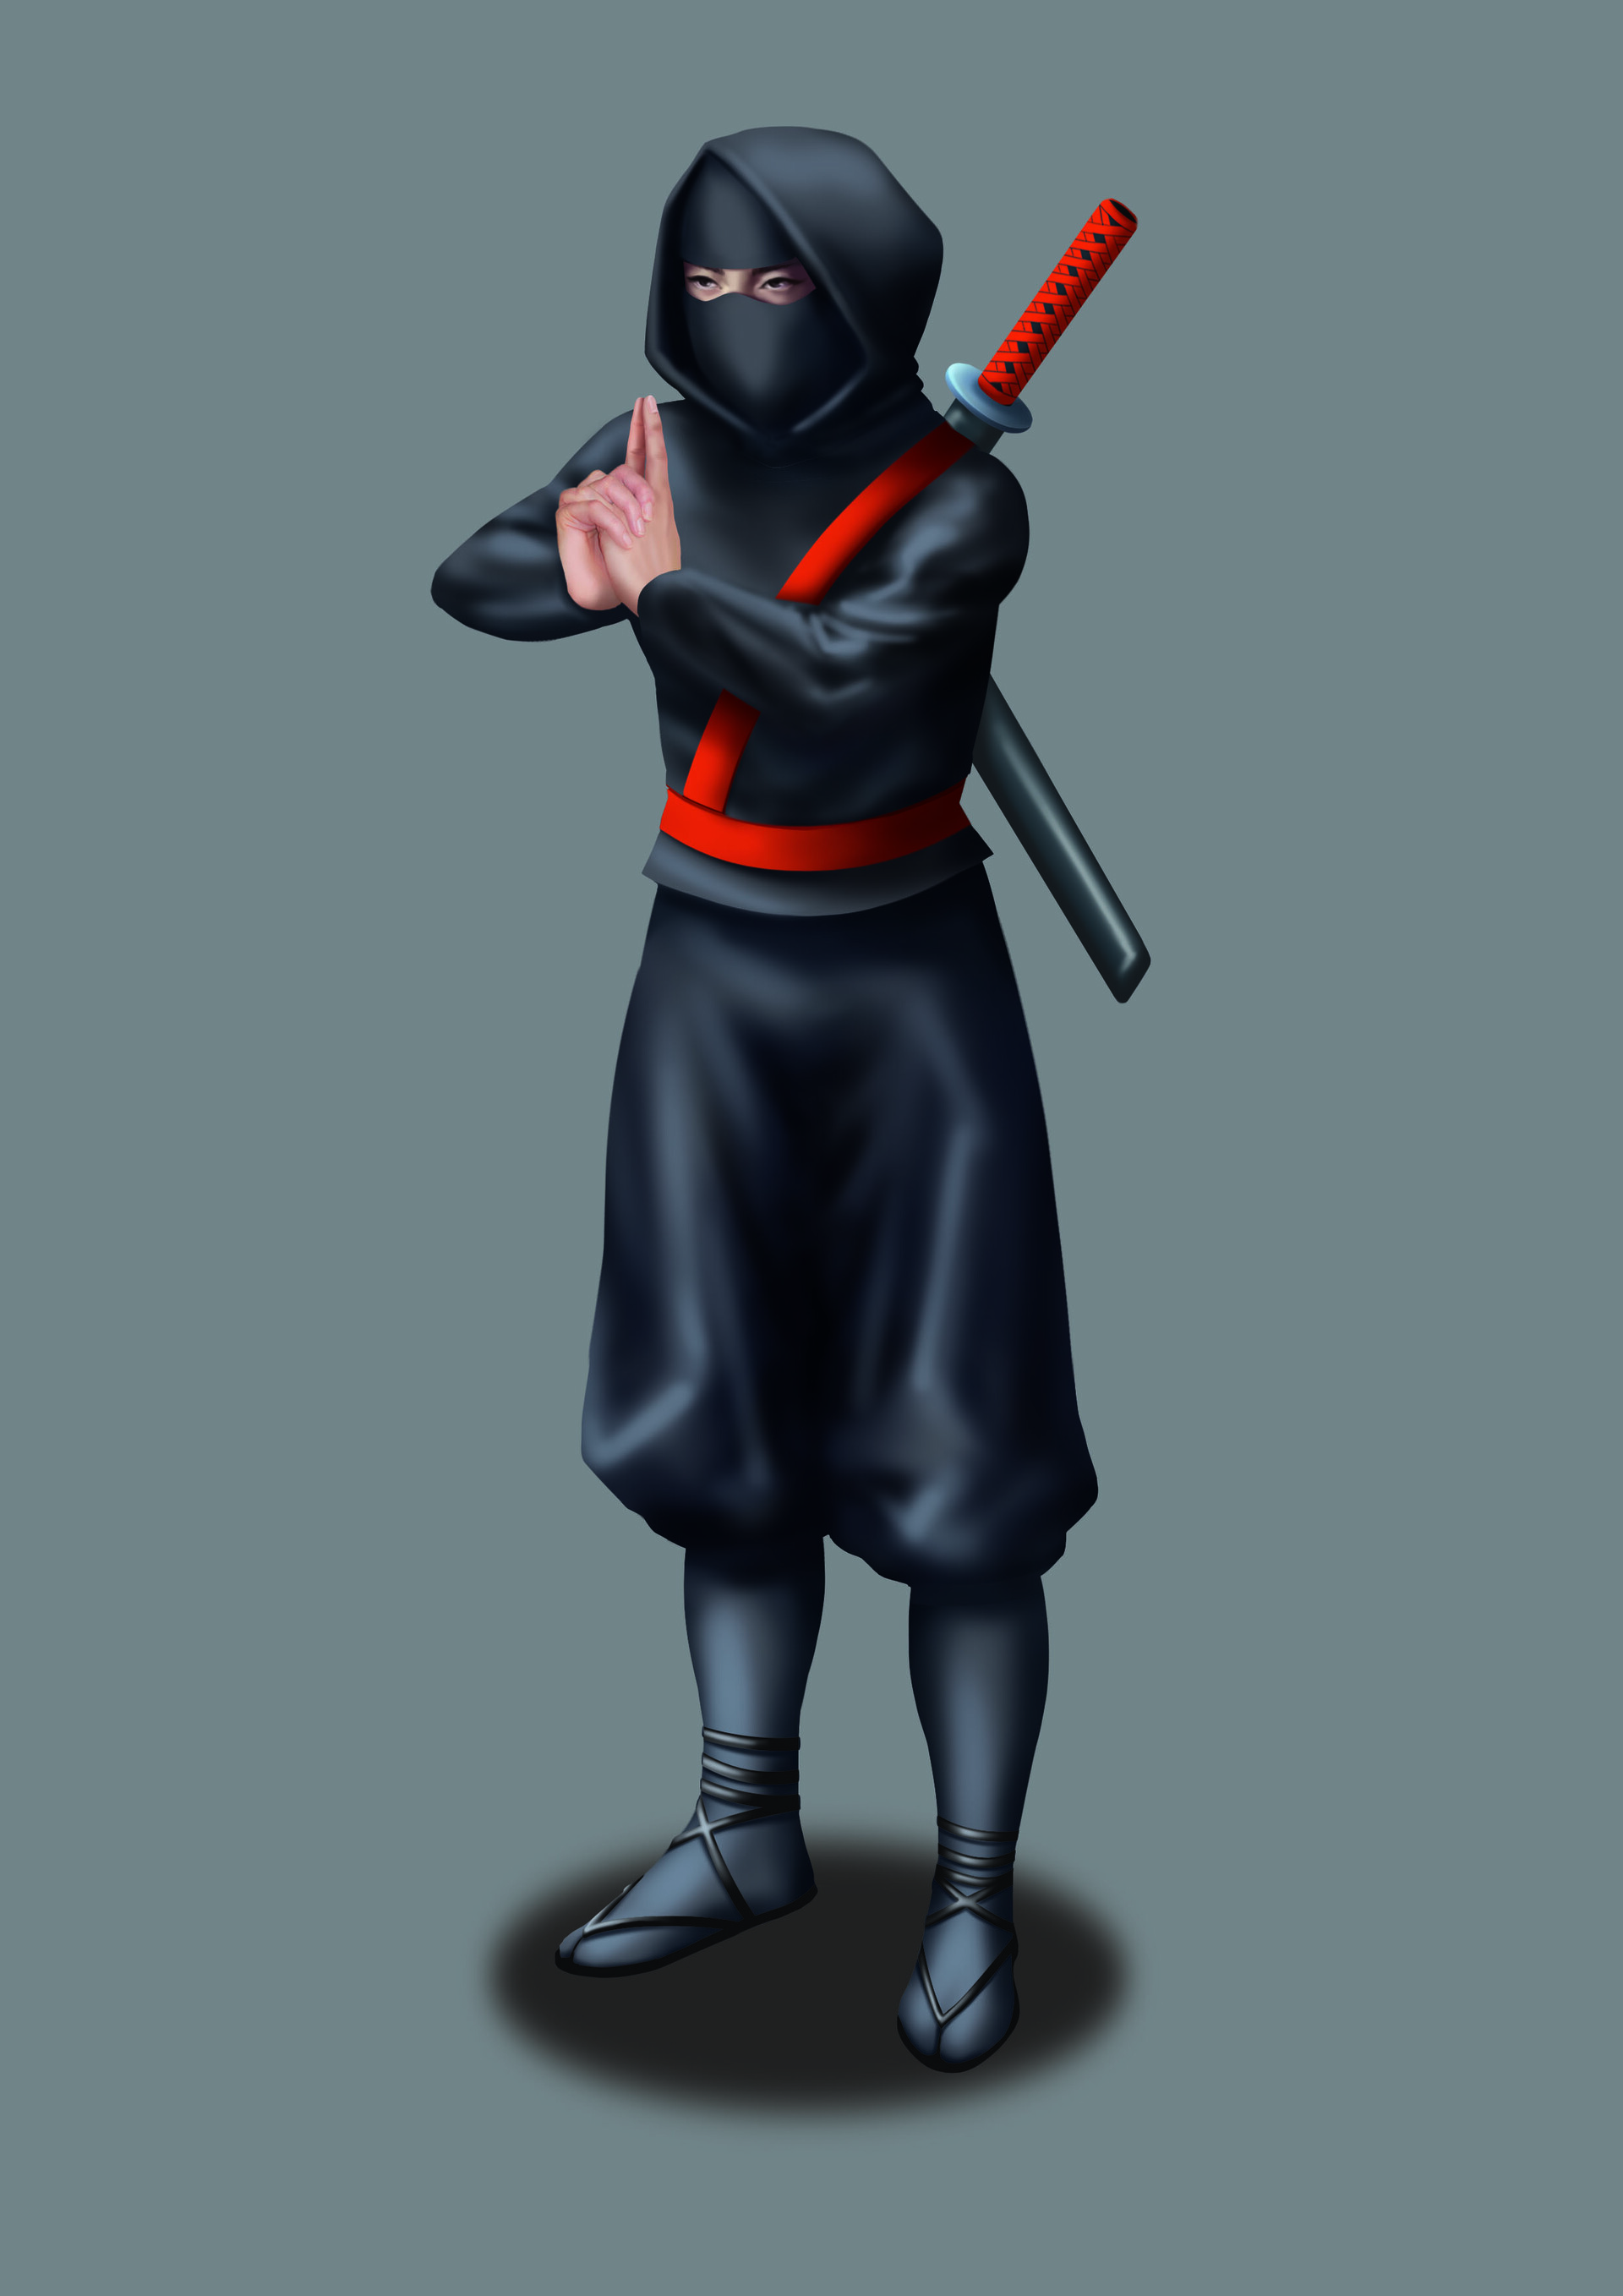 https://cdna.artstation.com/p/assets/images/images/018/636/076/large/lora-pang-kaimay-ninja-standing.jpg?1560153218